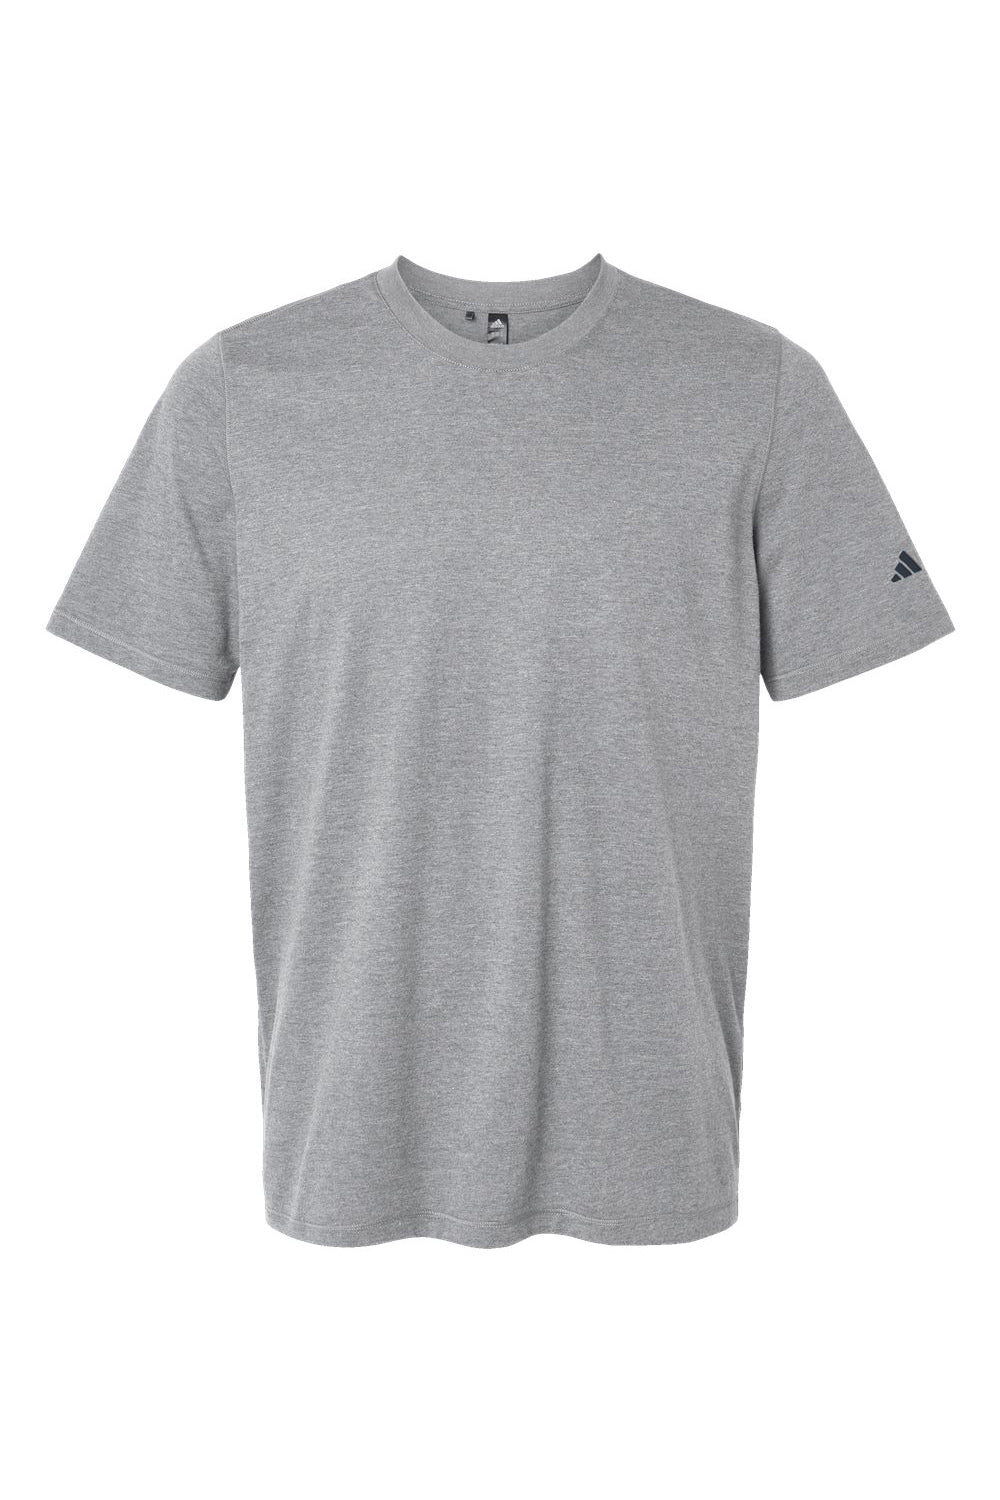 Adidas A556 Mens Short Sleeve Crewneck T-Shirt Heather Medium Grey Flat Front